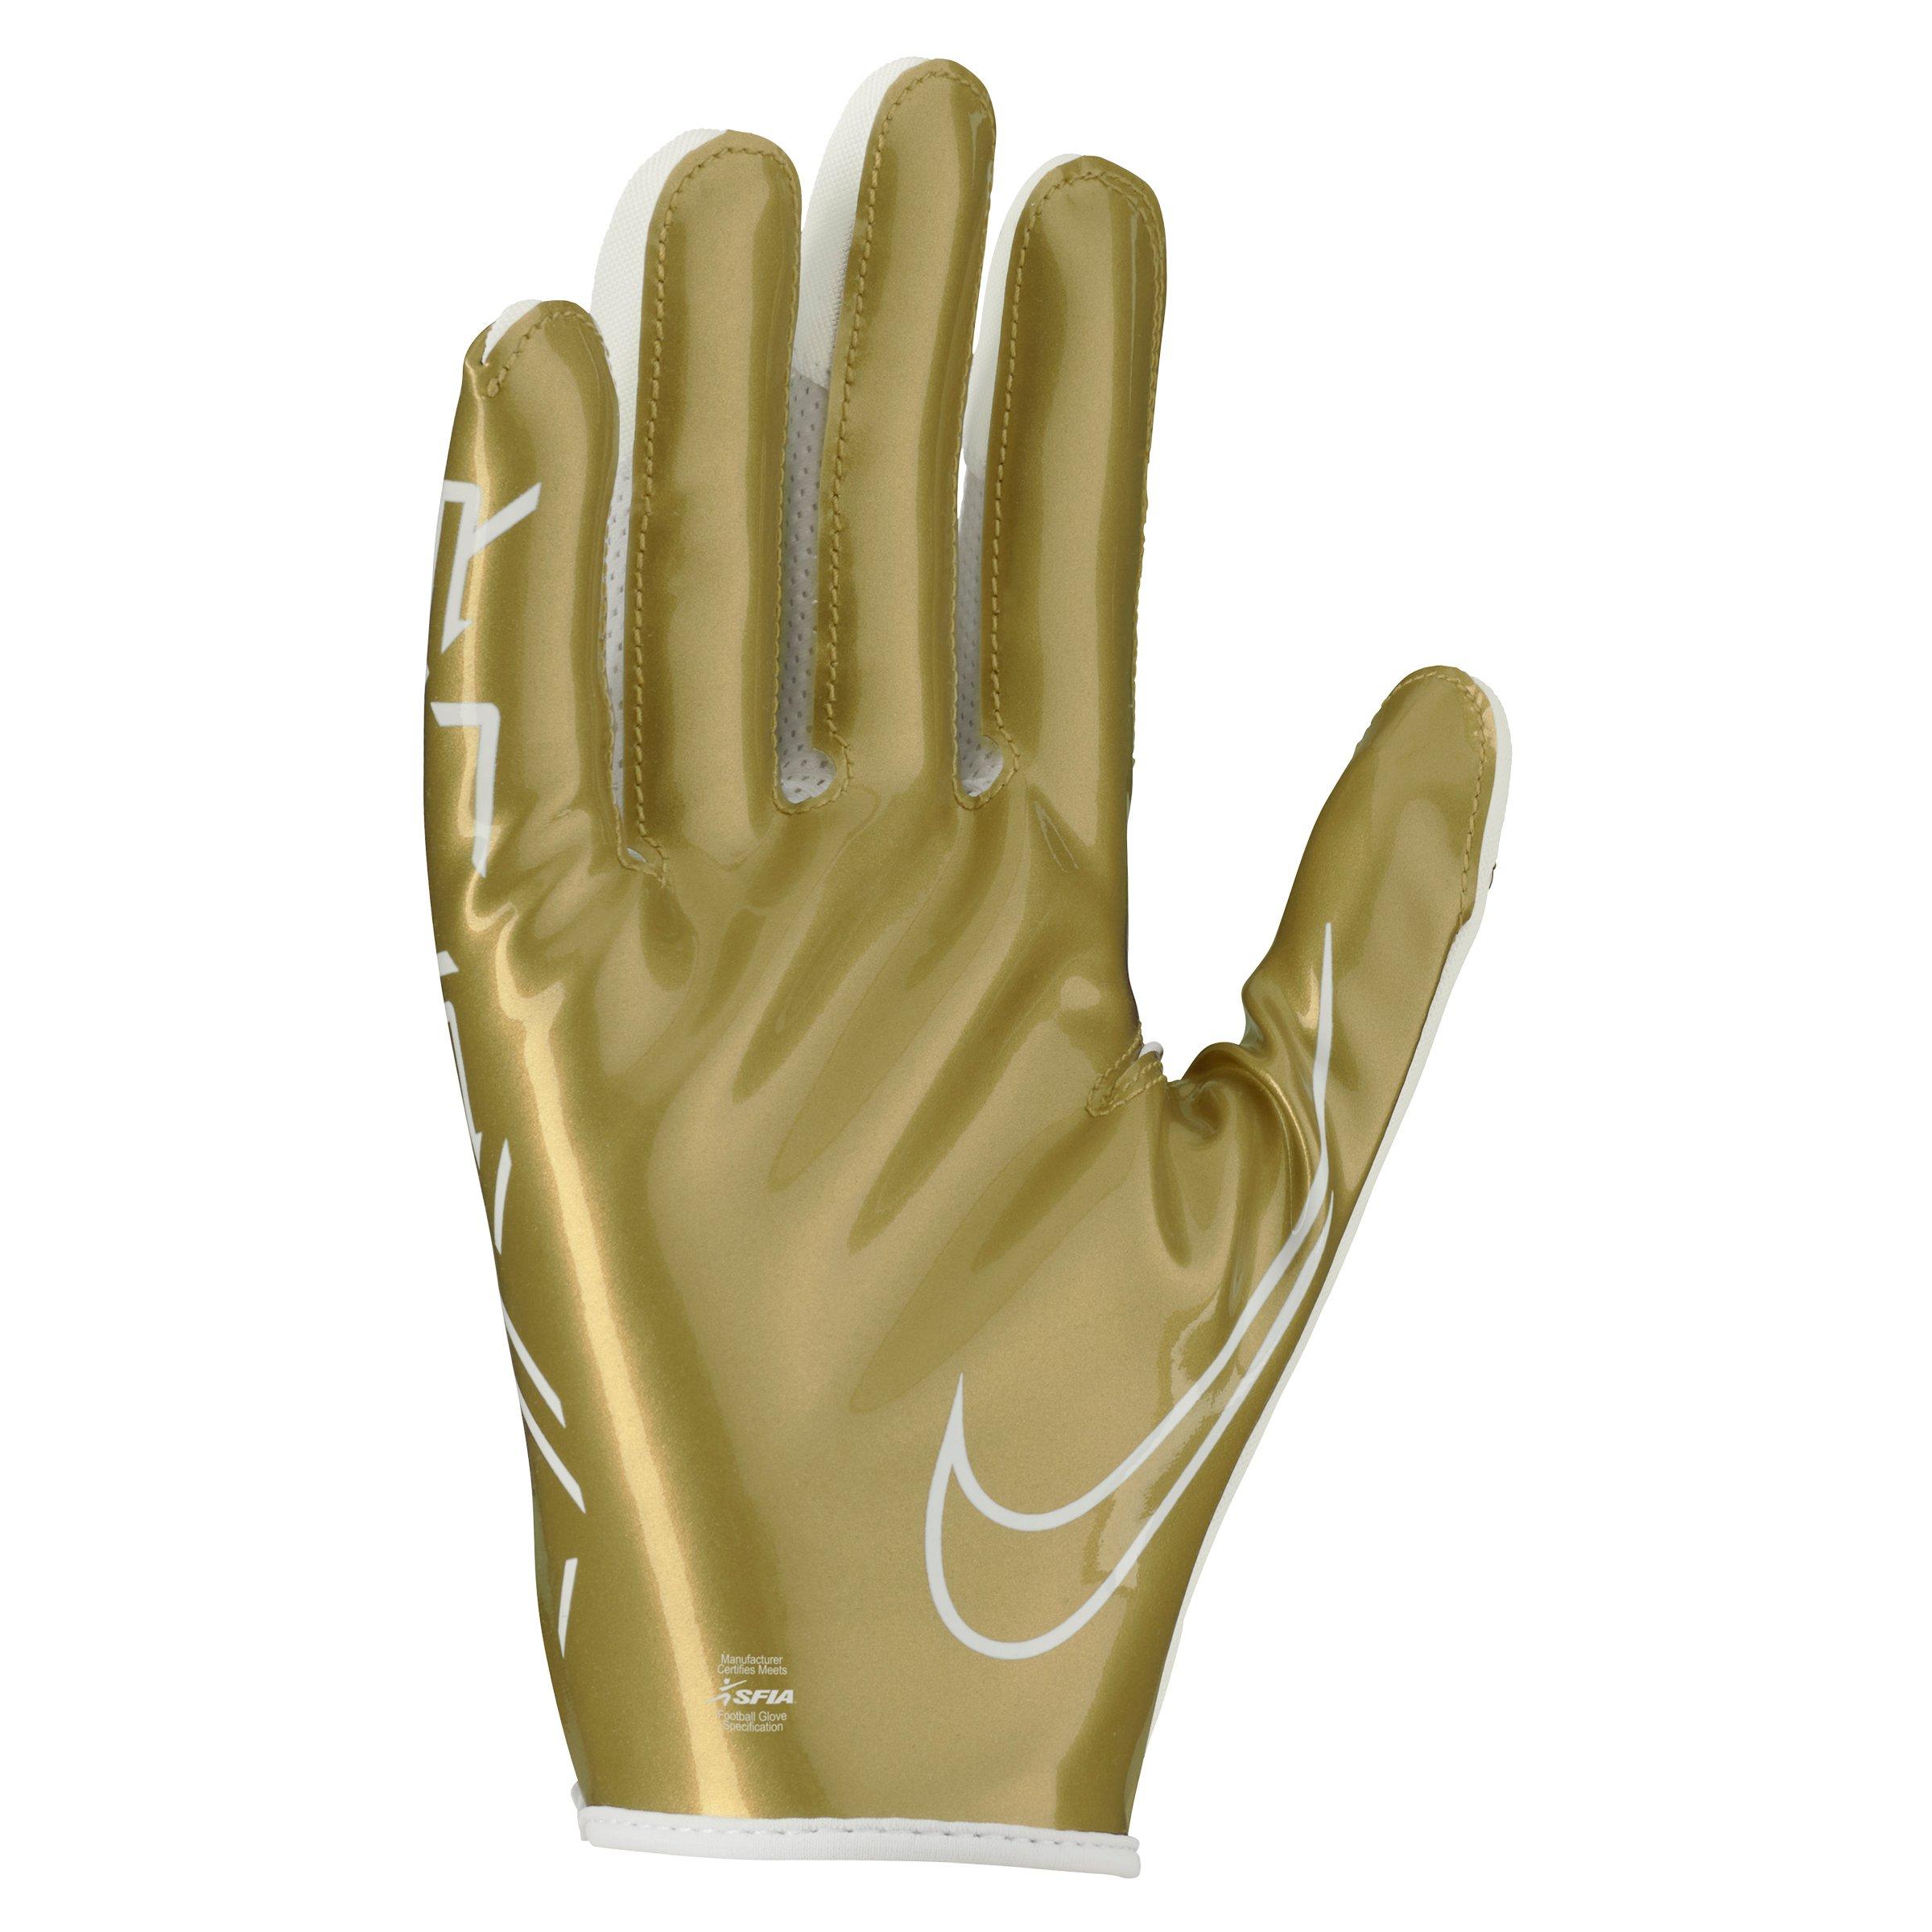 Nike Vapor Jet 5 Men's Football Gloves Medium Olive/Metallic Gold